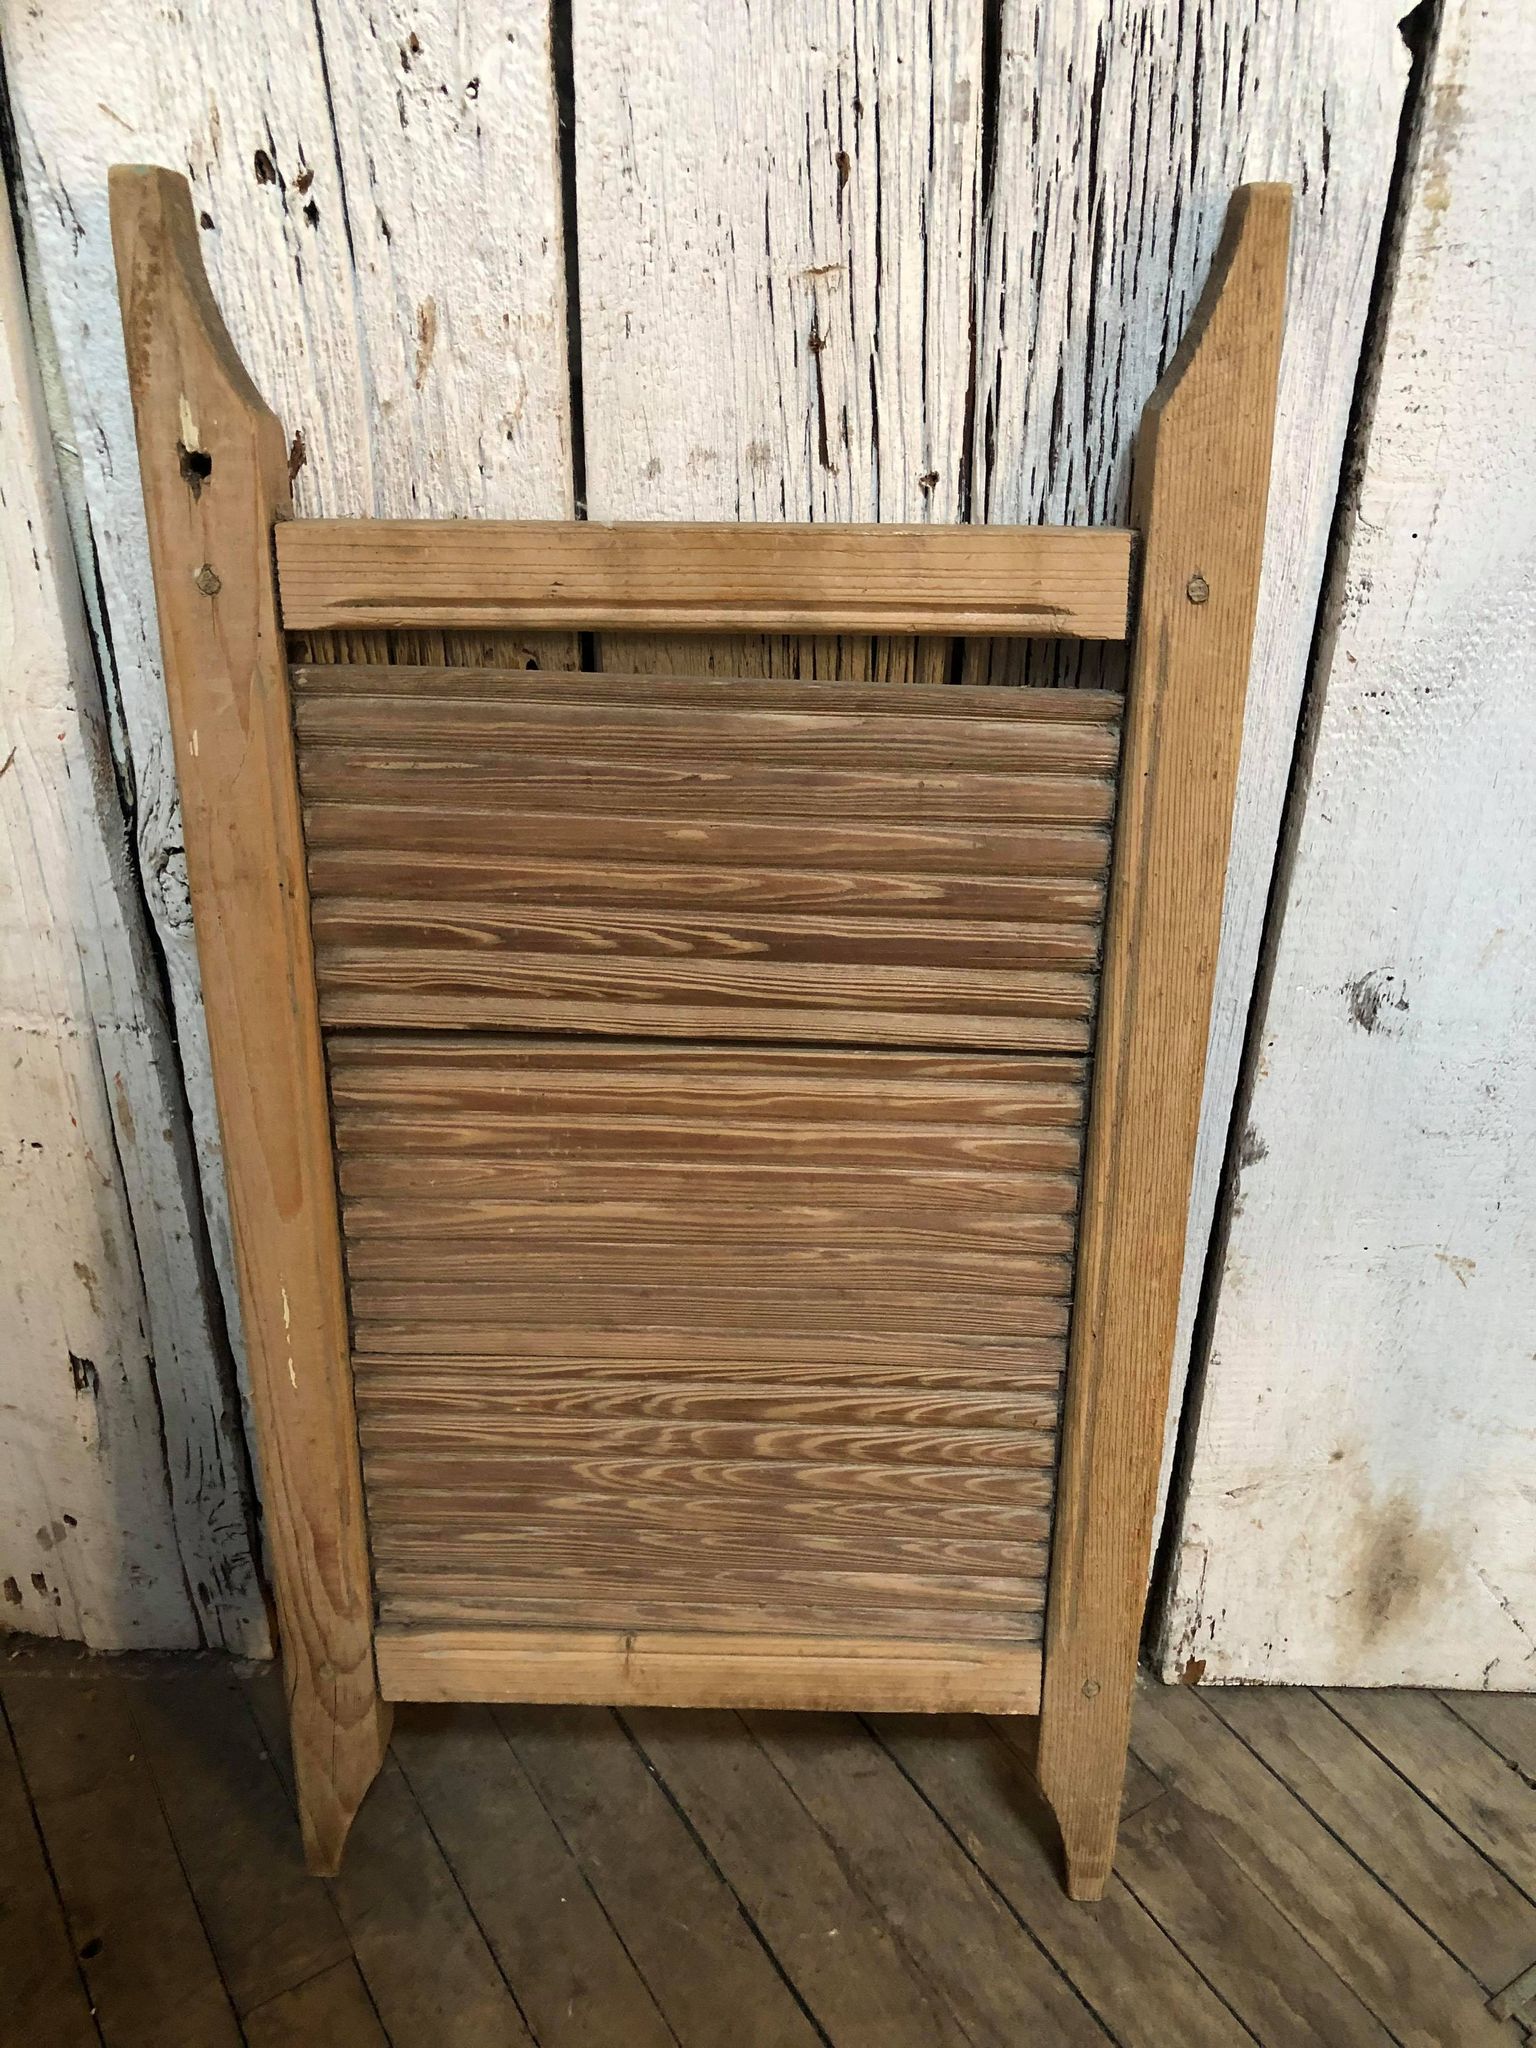 Vintage Wooden Scrubbing Board